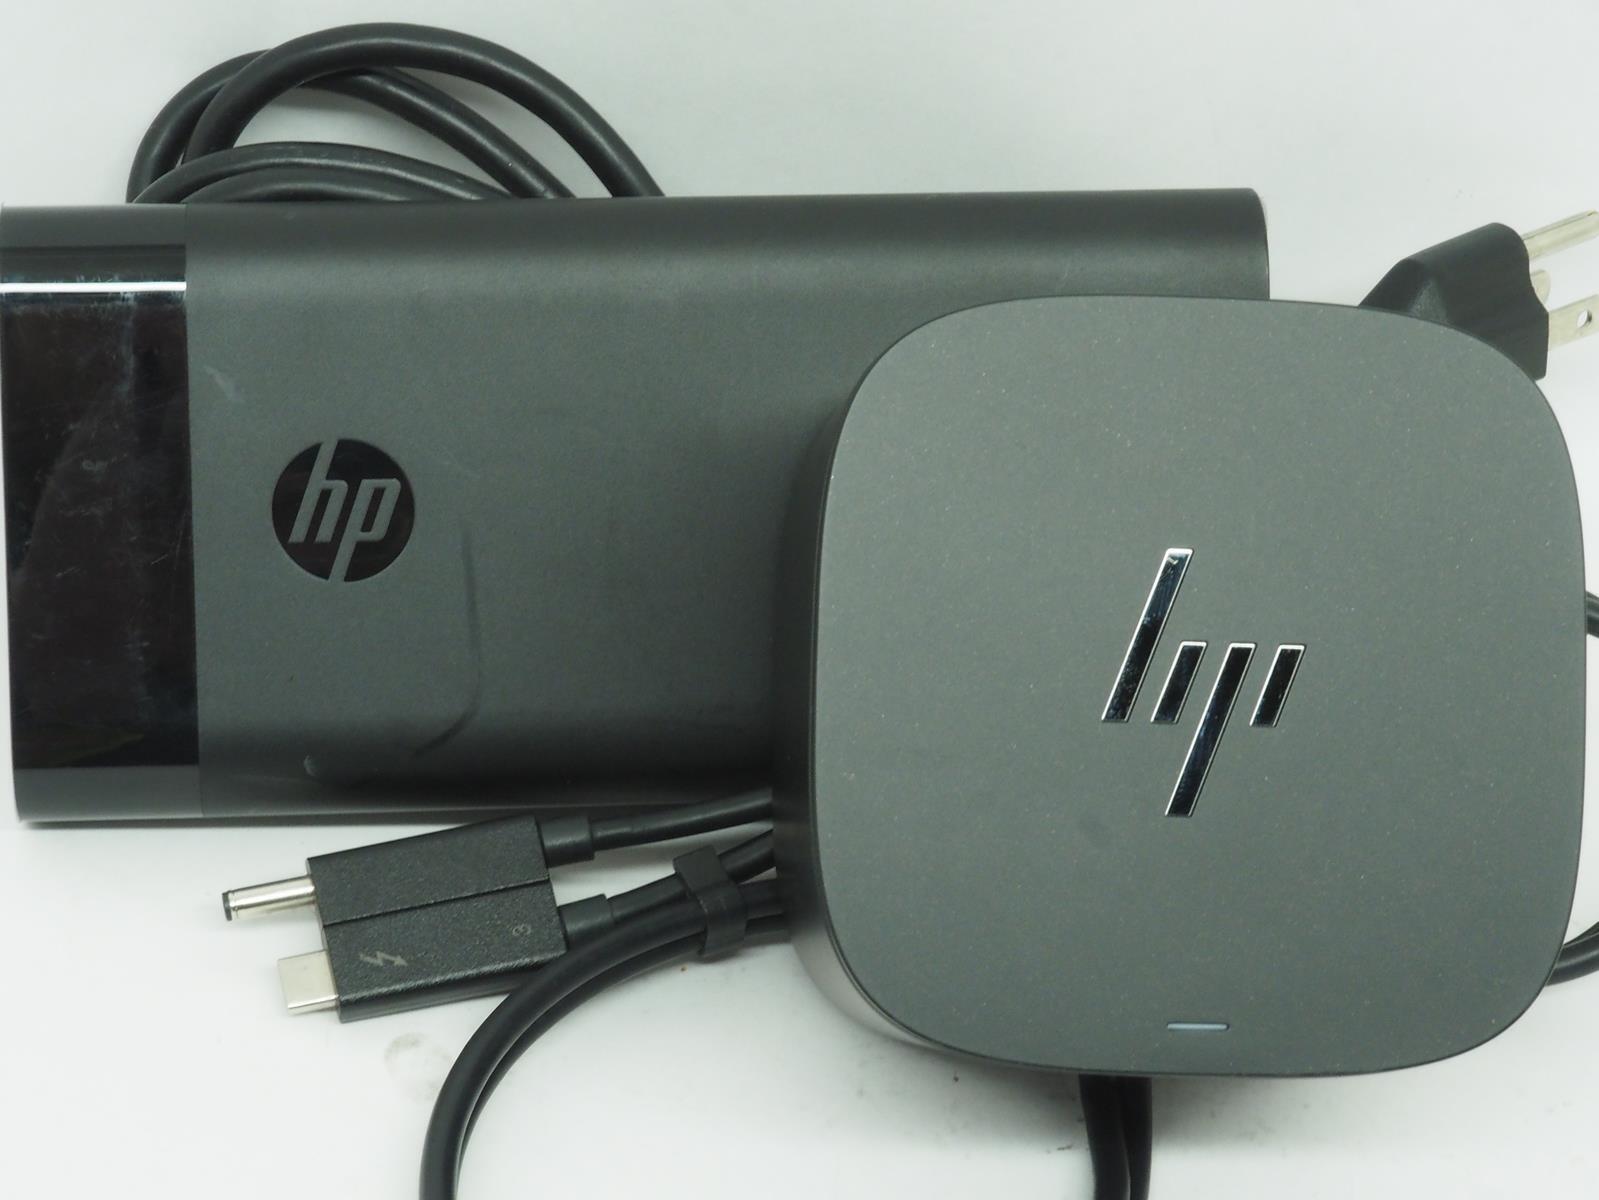 HP THUNDERBOLT DOCK G2 Thunderbolt 3 USB-C Docking Station w/ 230w Power Supply